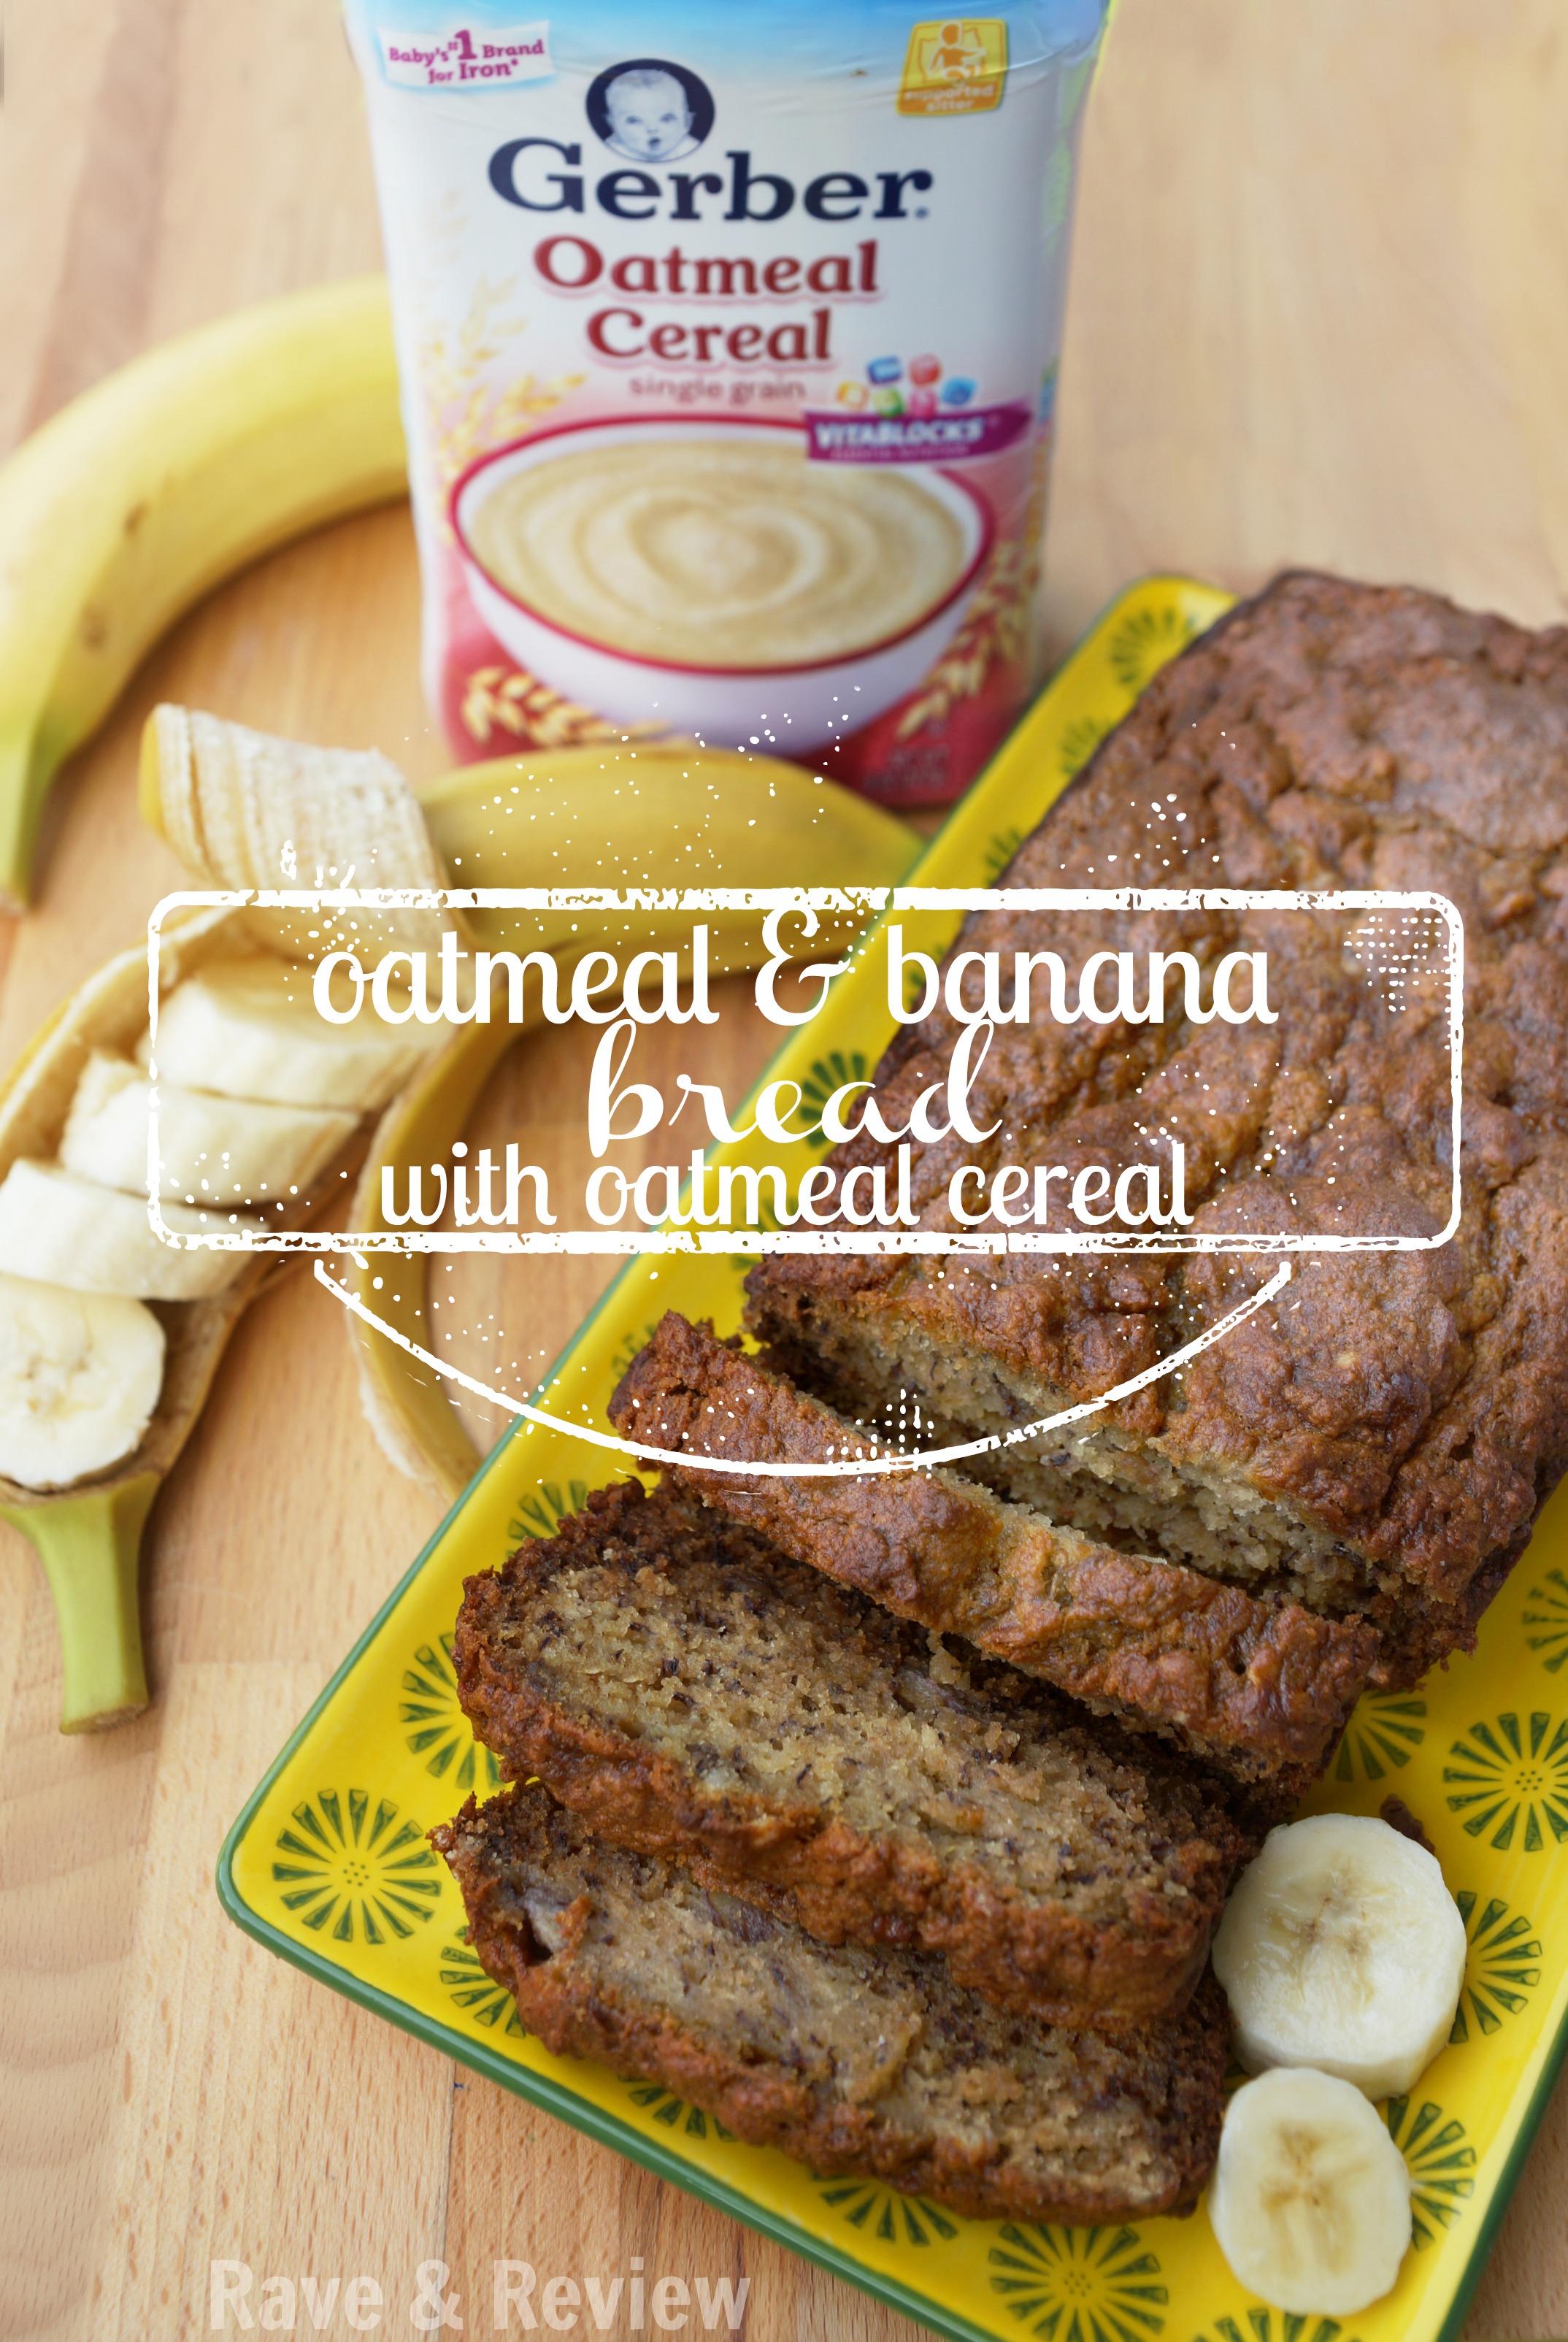 gerber oatmeal and banana cereal